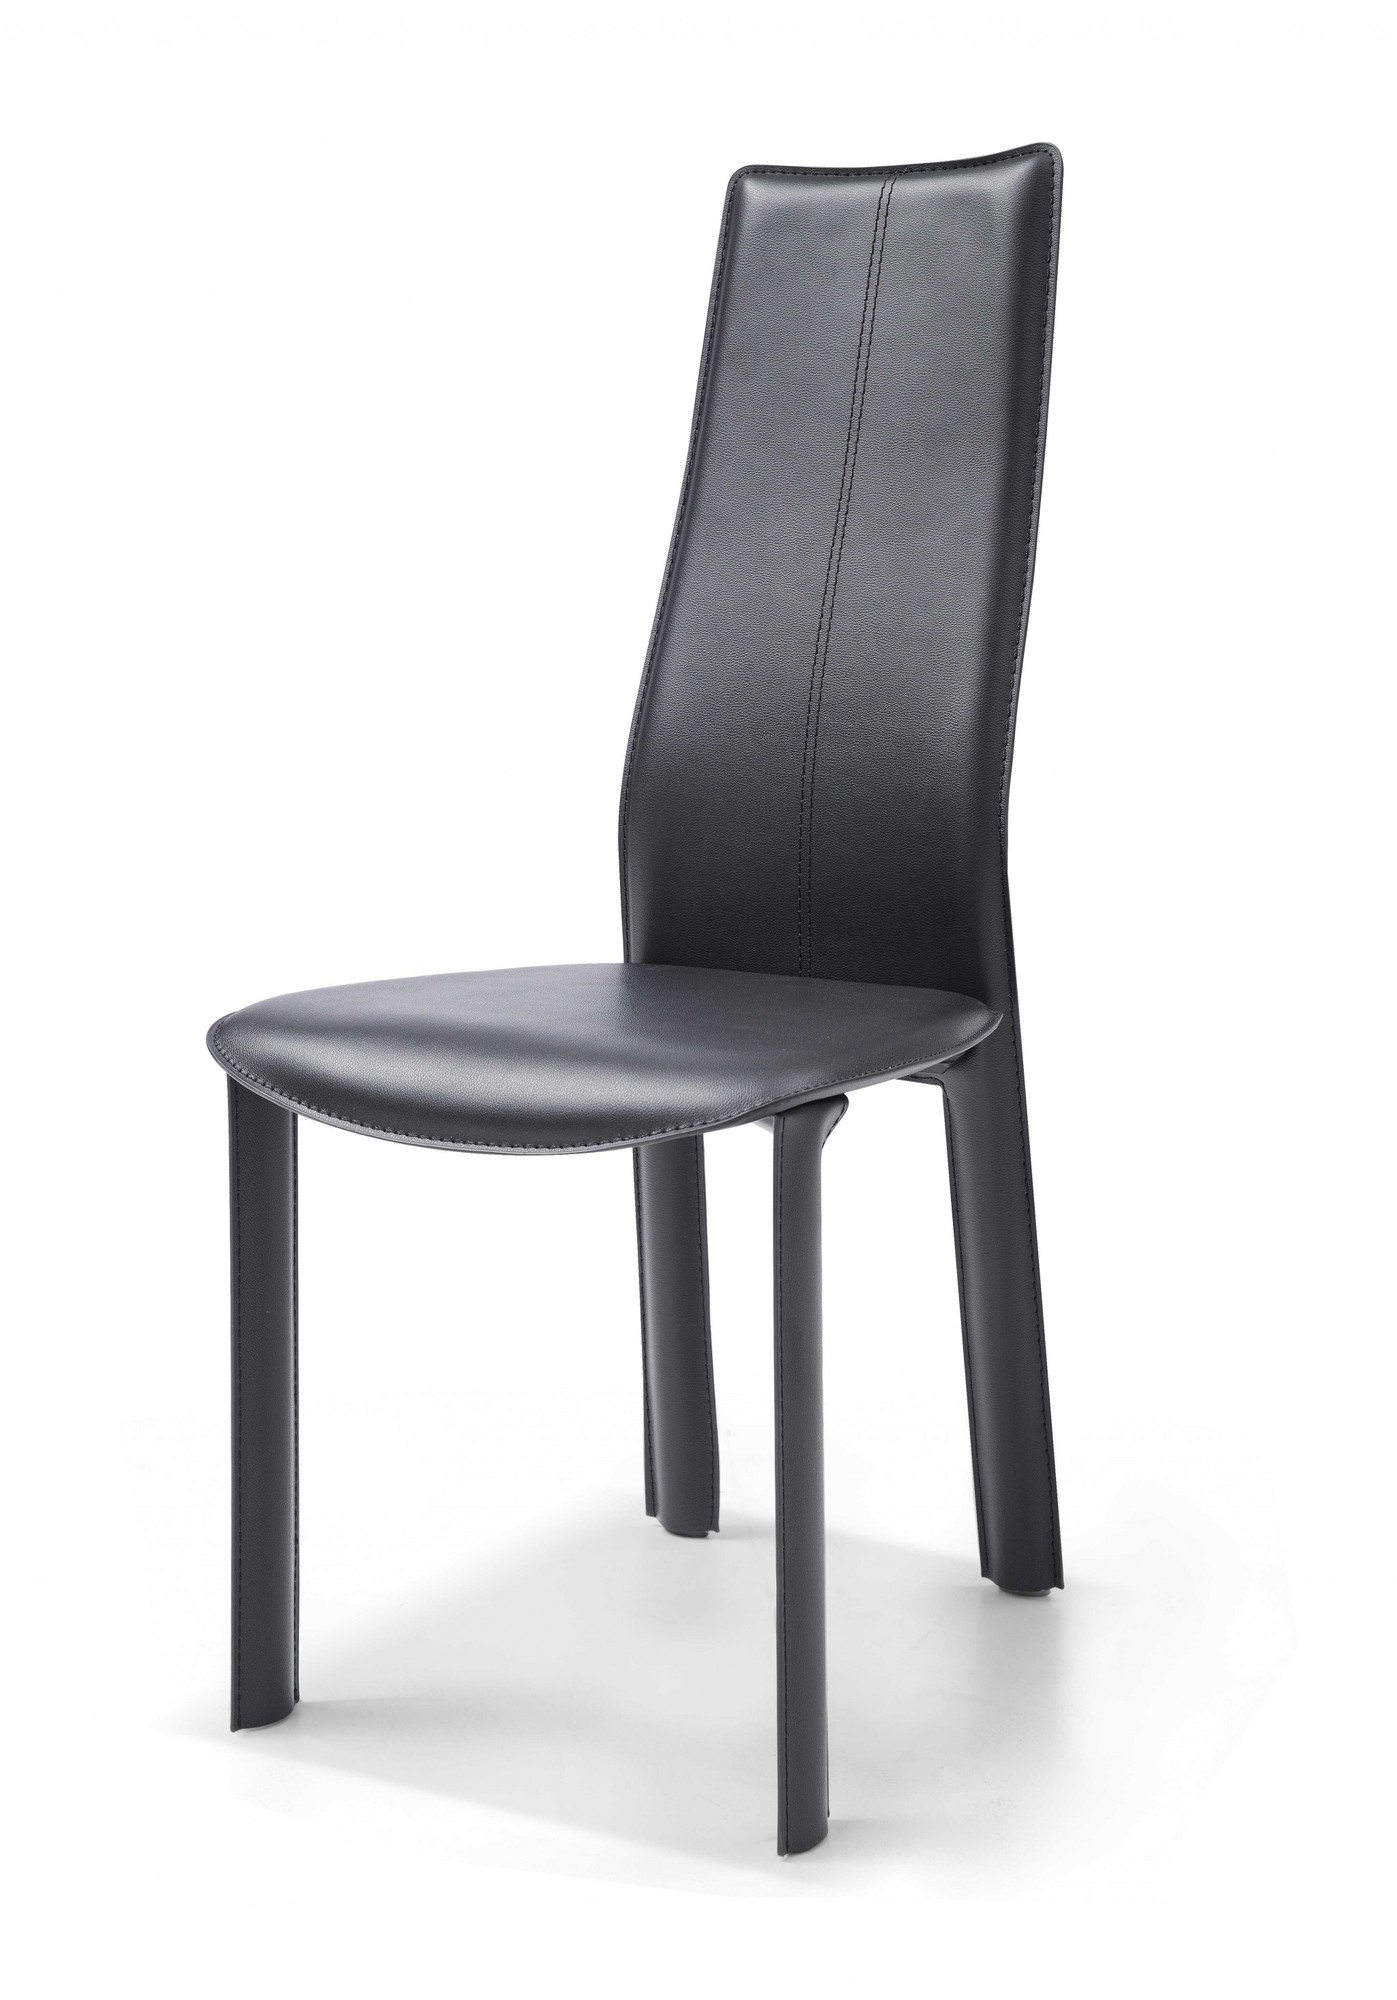 18" X 23" X 41" Grey Aluminum Dining Chair